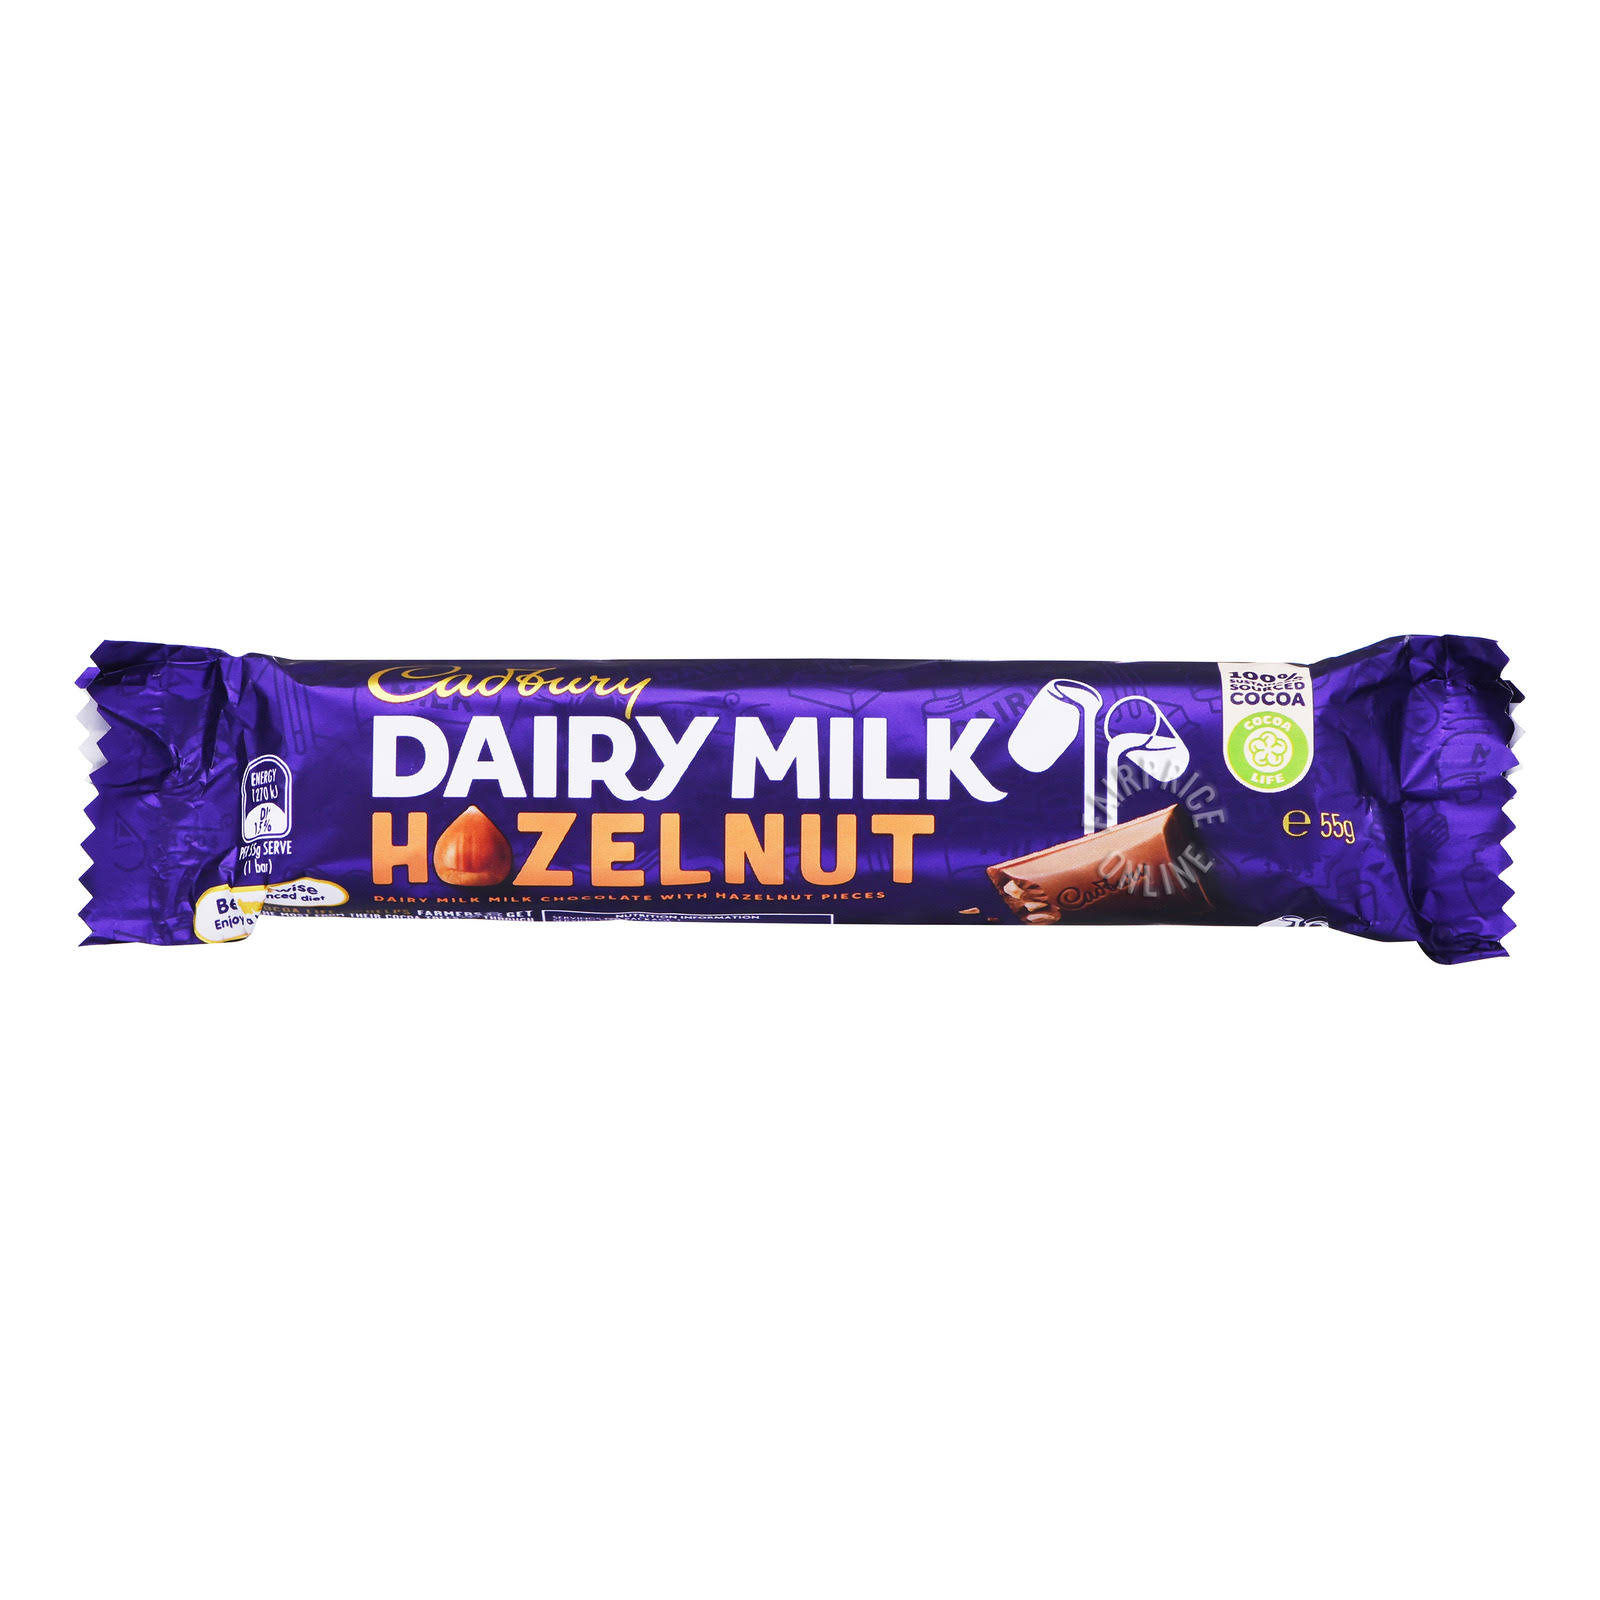 Cadbury Dairy Milk Chocolate Bar - Hazelnut, 55g